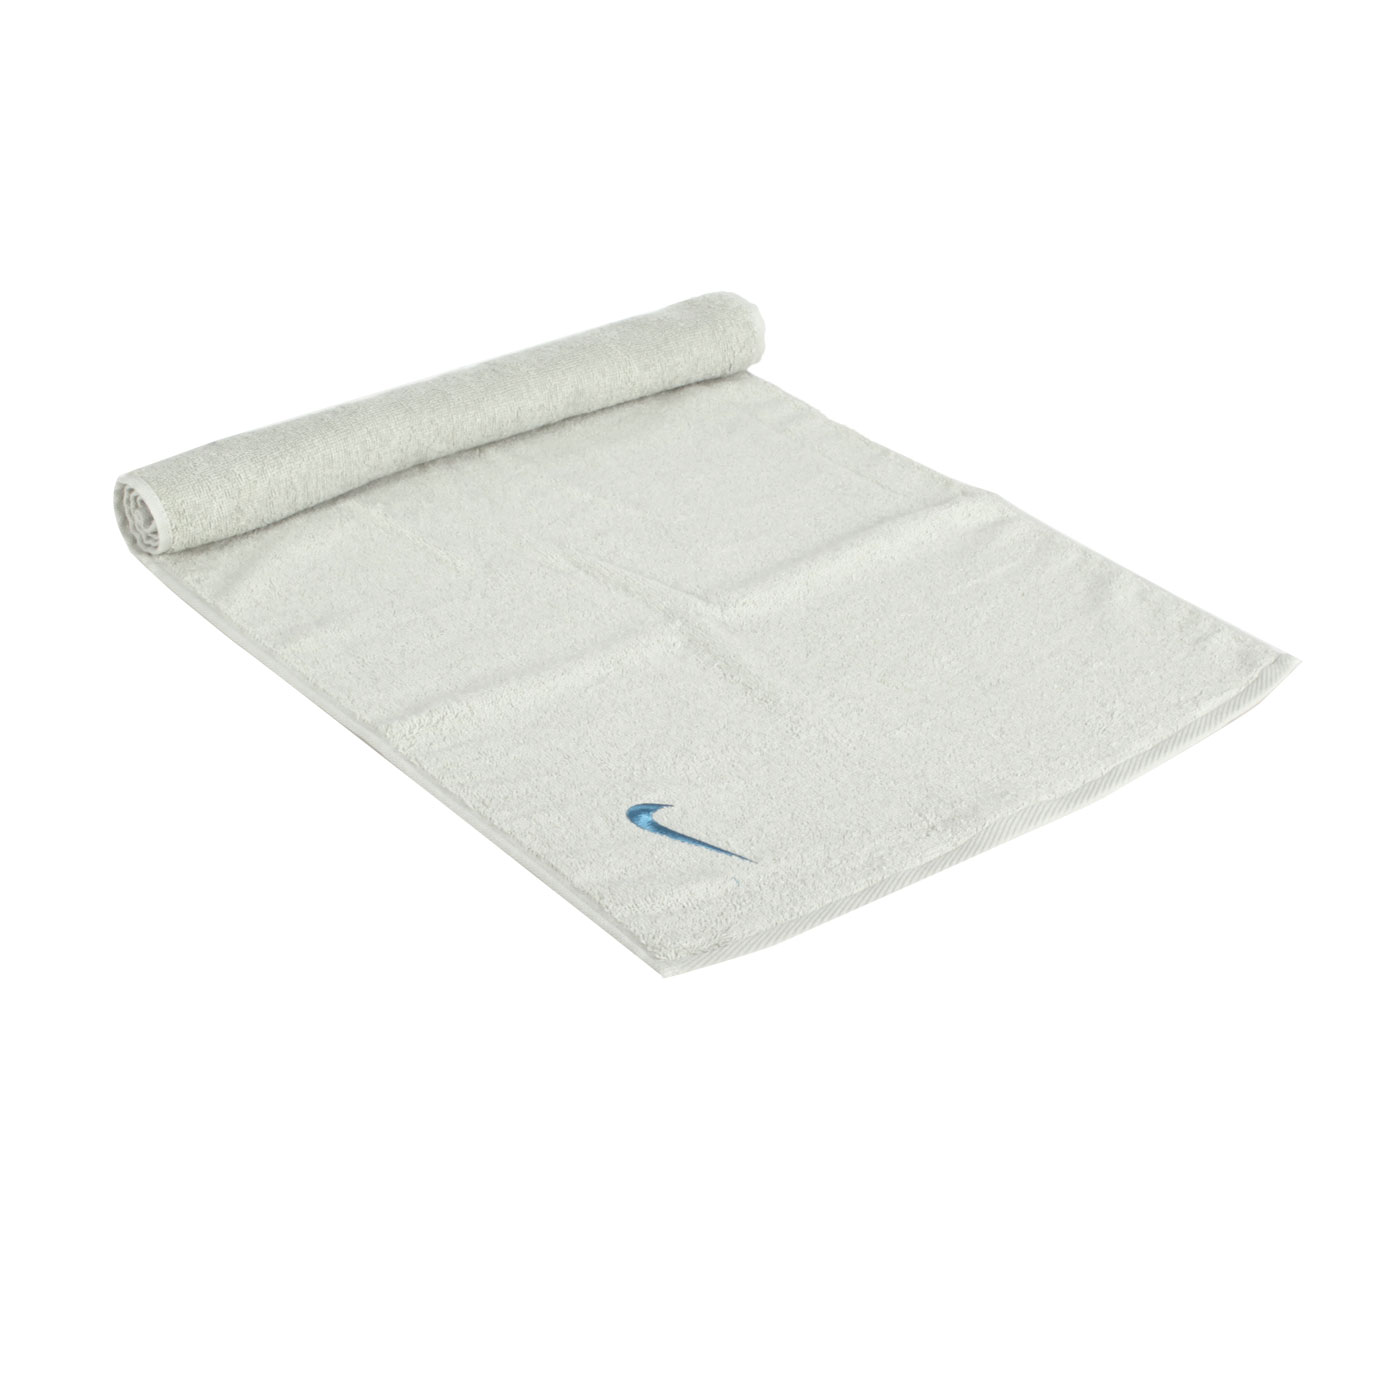 NIKE SOLID CORE 毛巾(80x35cm)  N1001541050NS - 米綠深湖藍